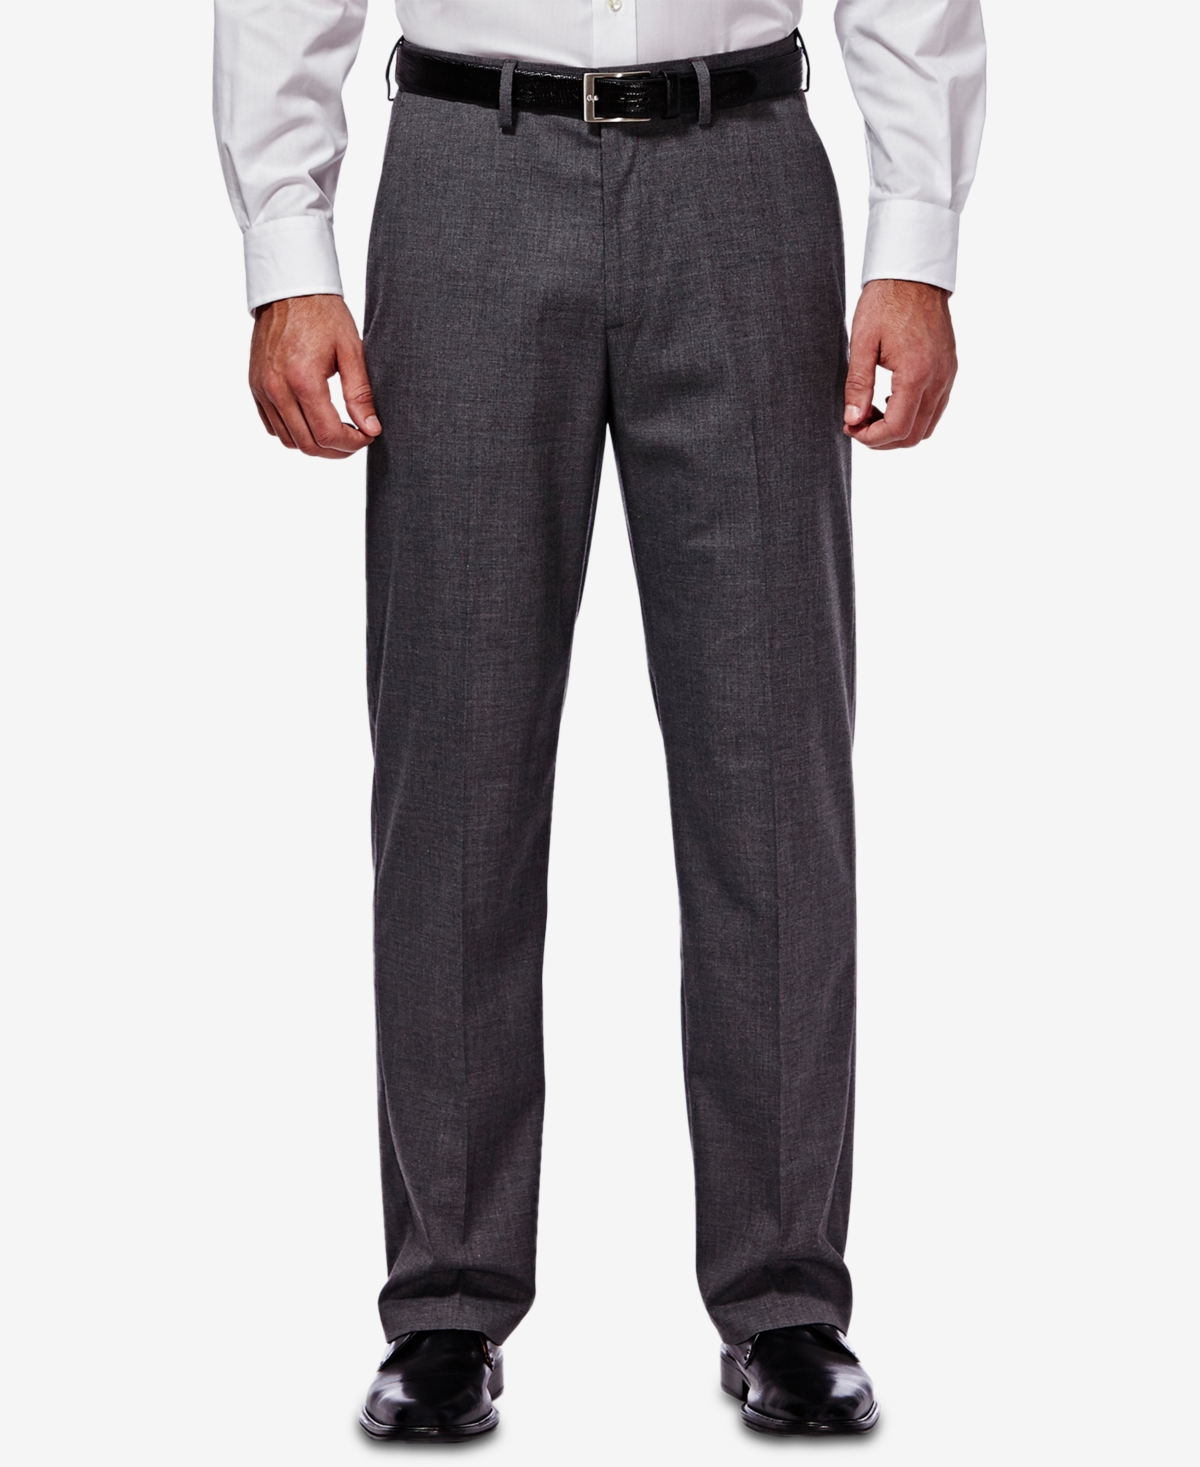 J.m. Haggar Men's Premium Stretch Classic Fit Flat Front Suit Pant - Dark Grey